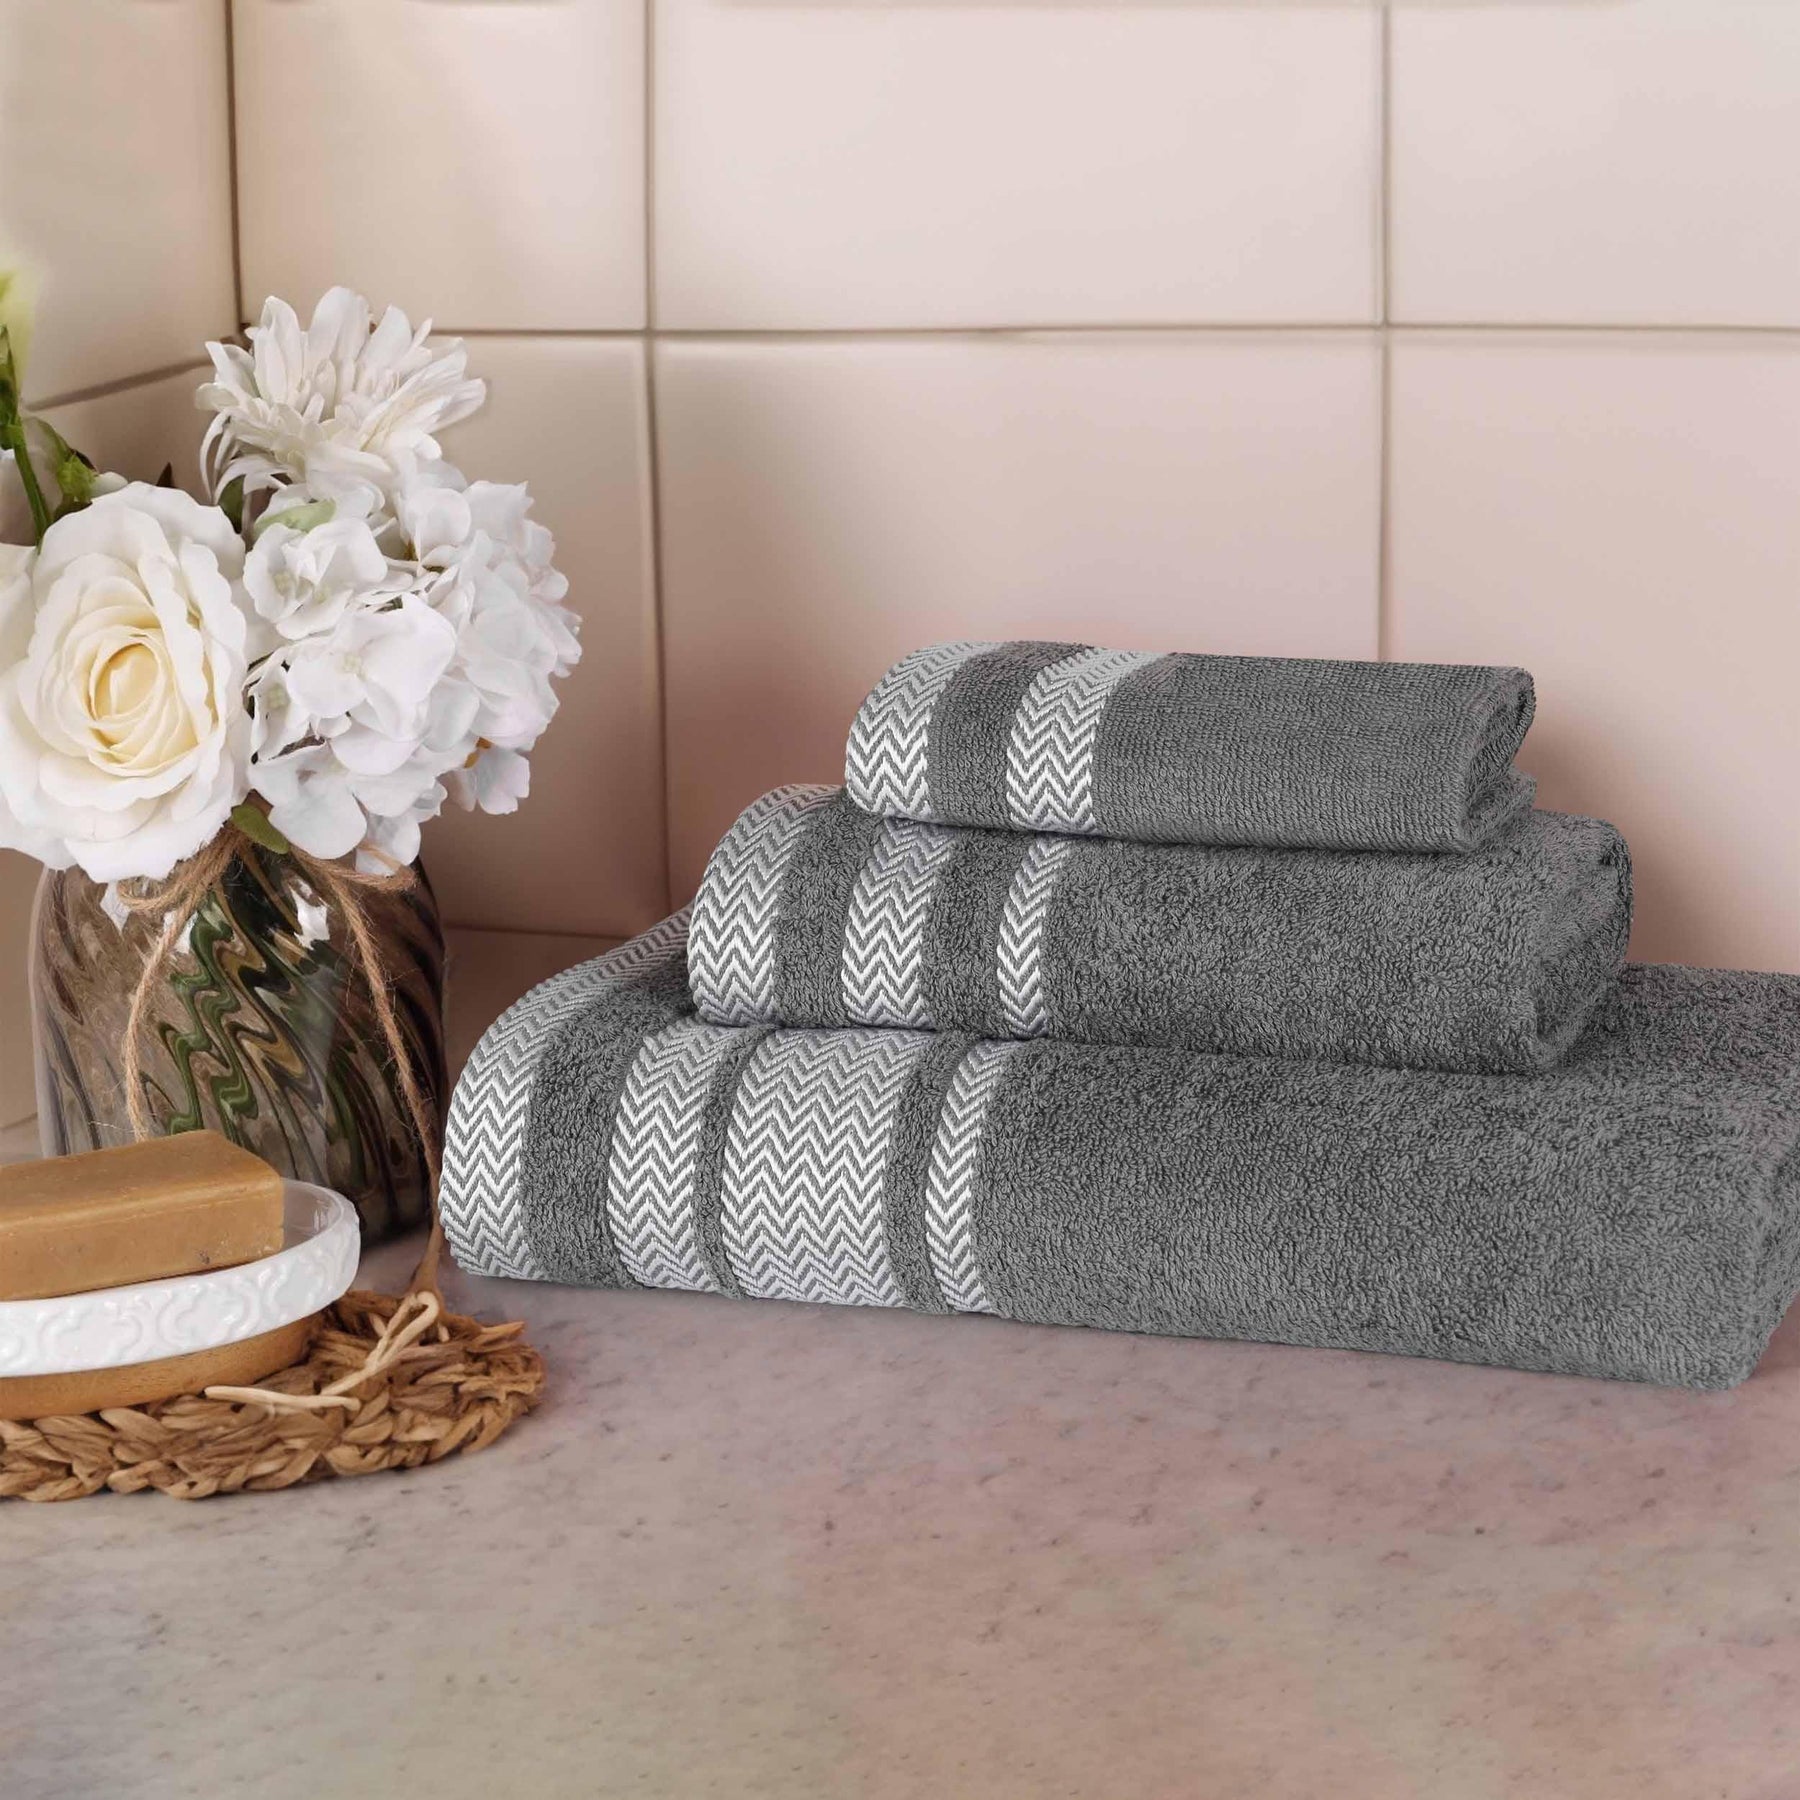 Hays Cotton Medium Weight 3 Piece Assorted Bathroom Towel Set - Towel Set by Superior - Superior 